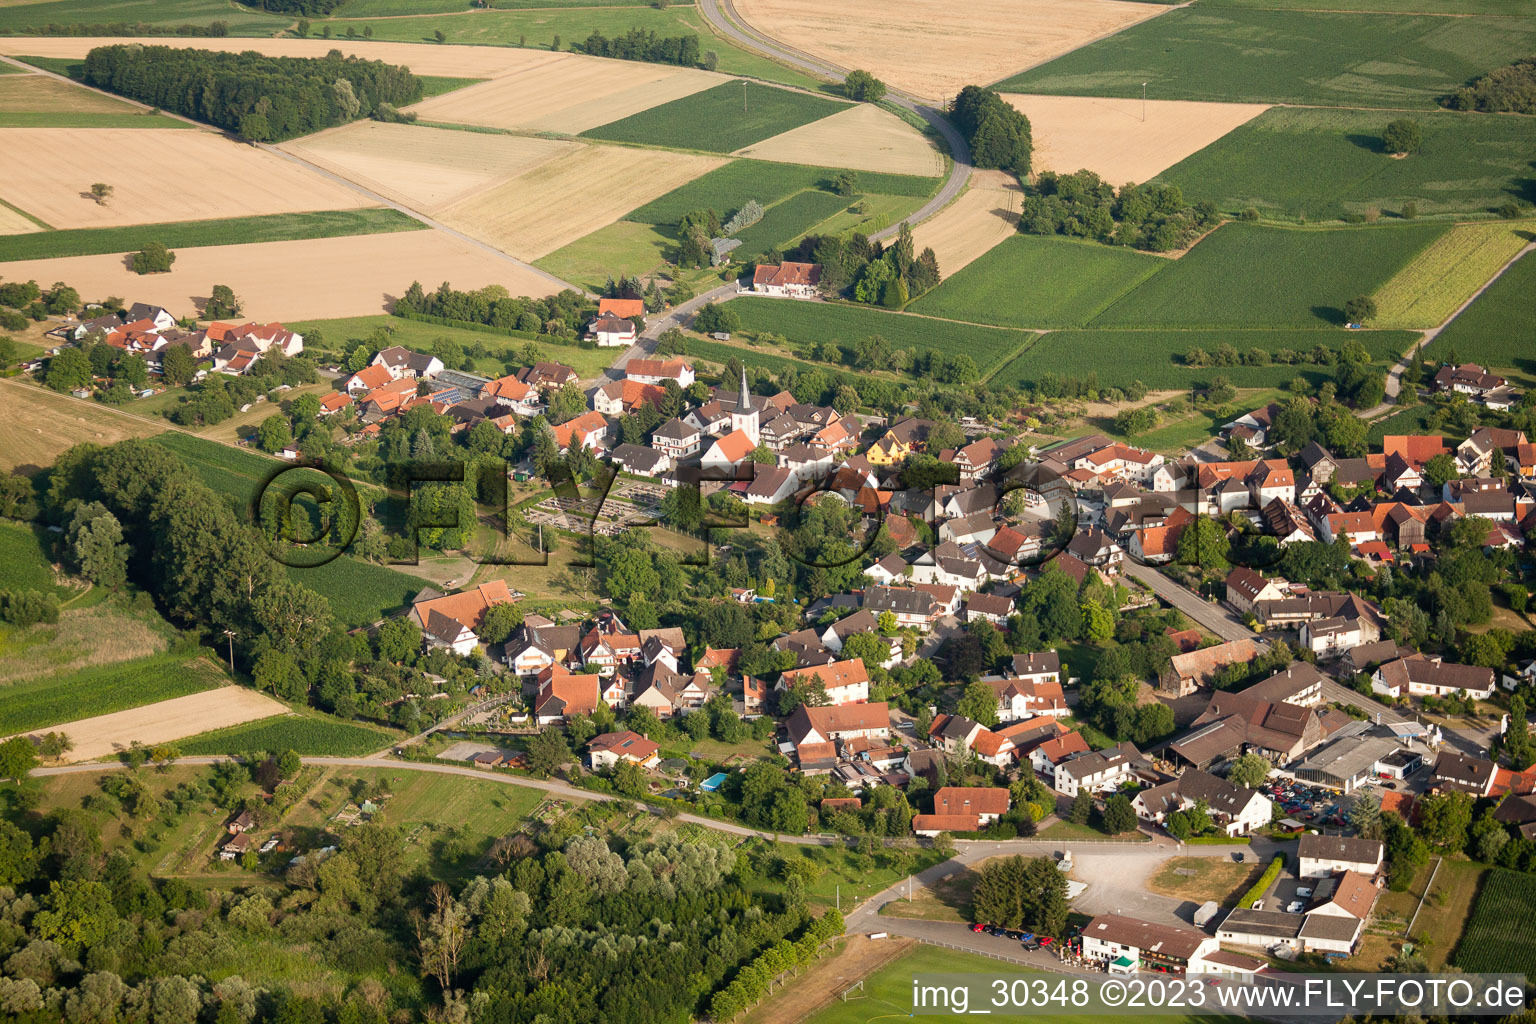 Quartier Diersheim in Rheinau dans le département Bade-Wurtemberg, Allemagne vue d'en haut